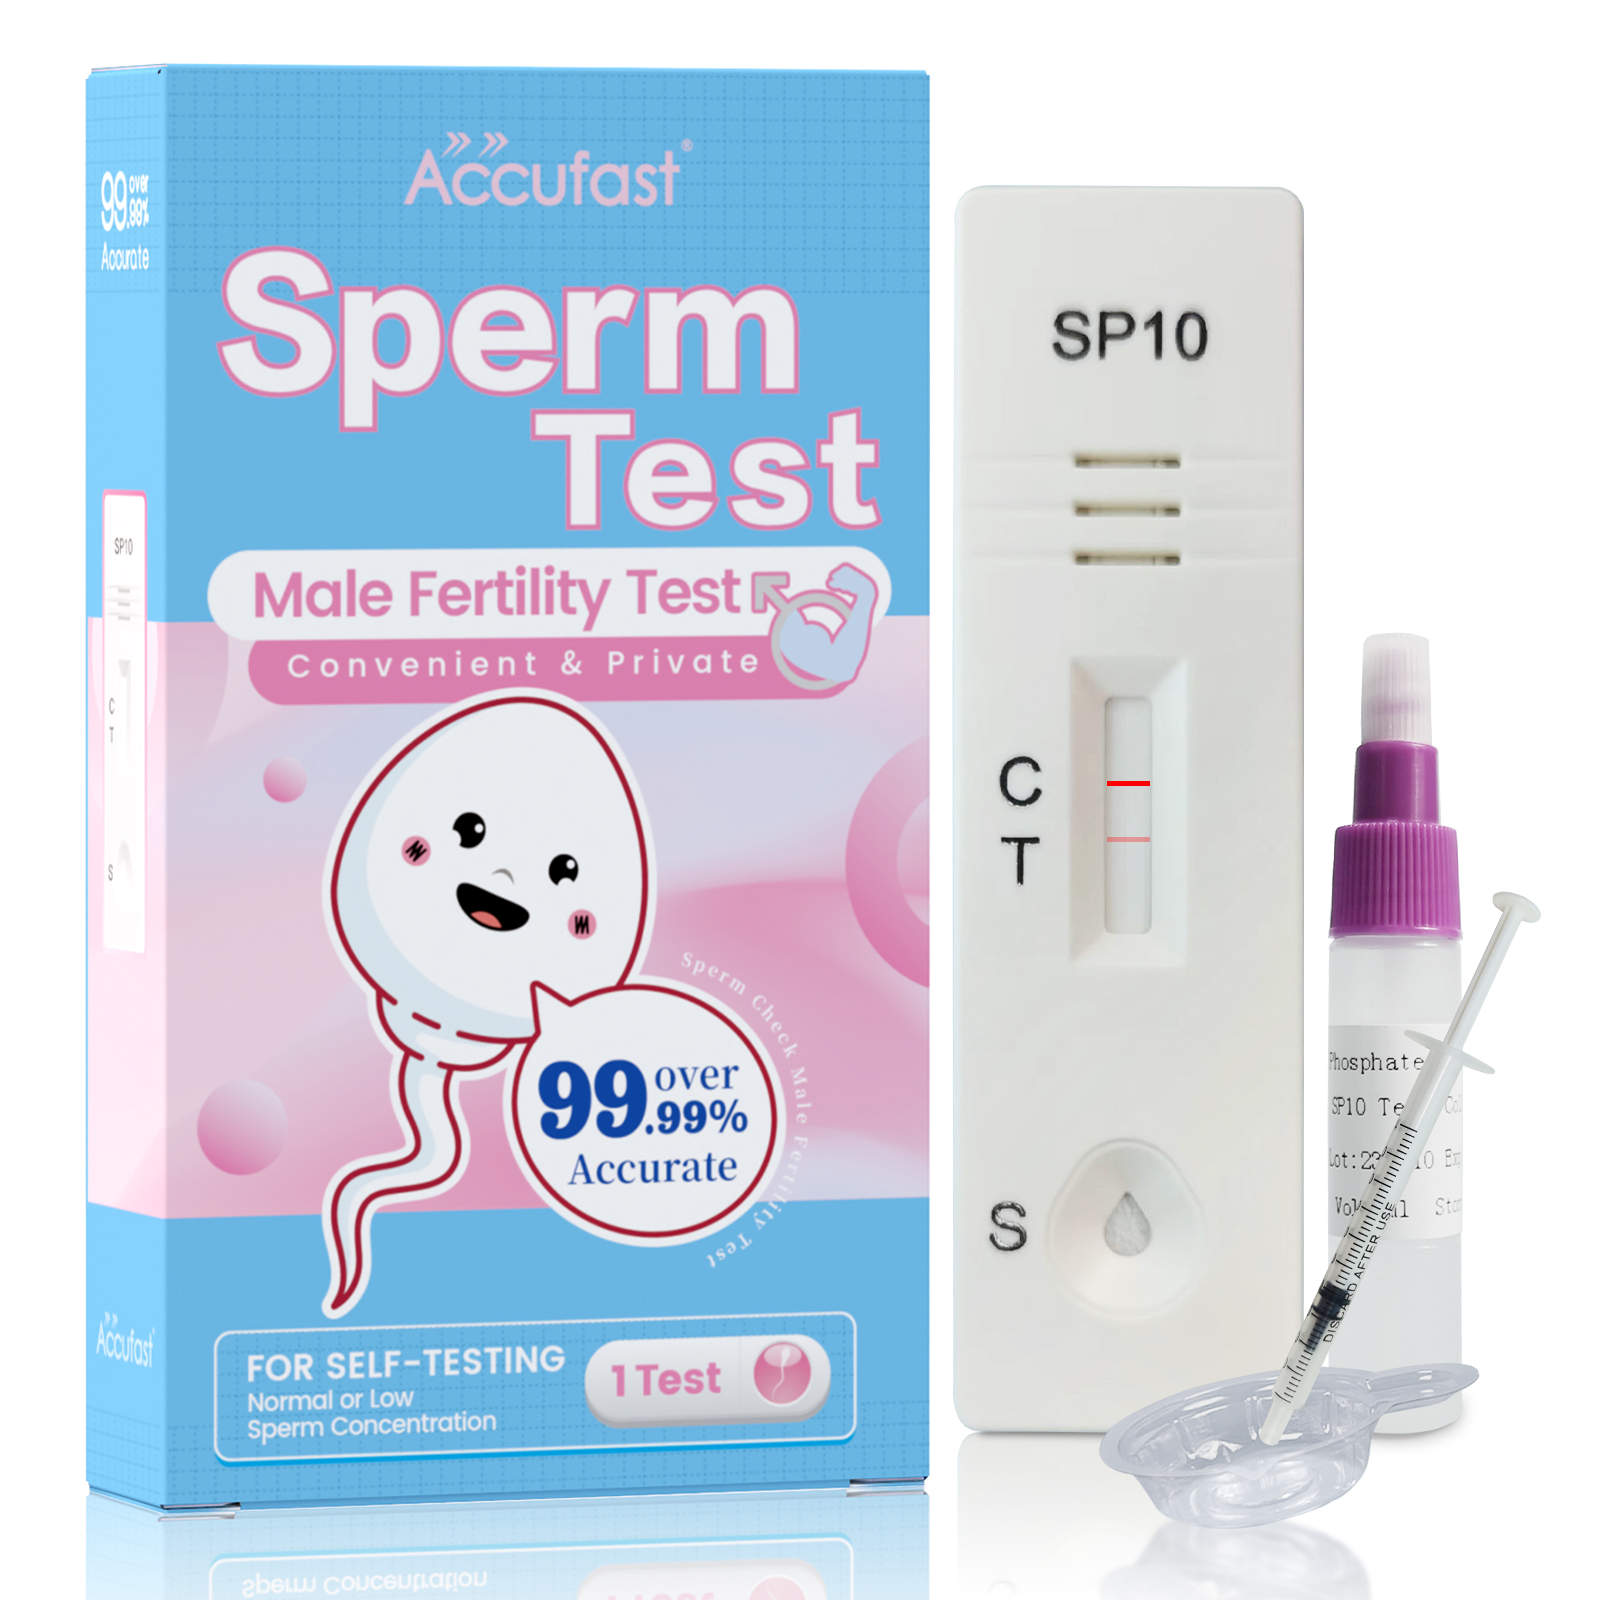 MaleSperm（Male Fertility）Test-AccuFast